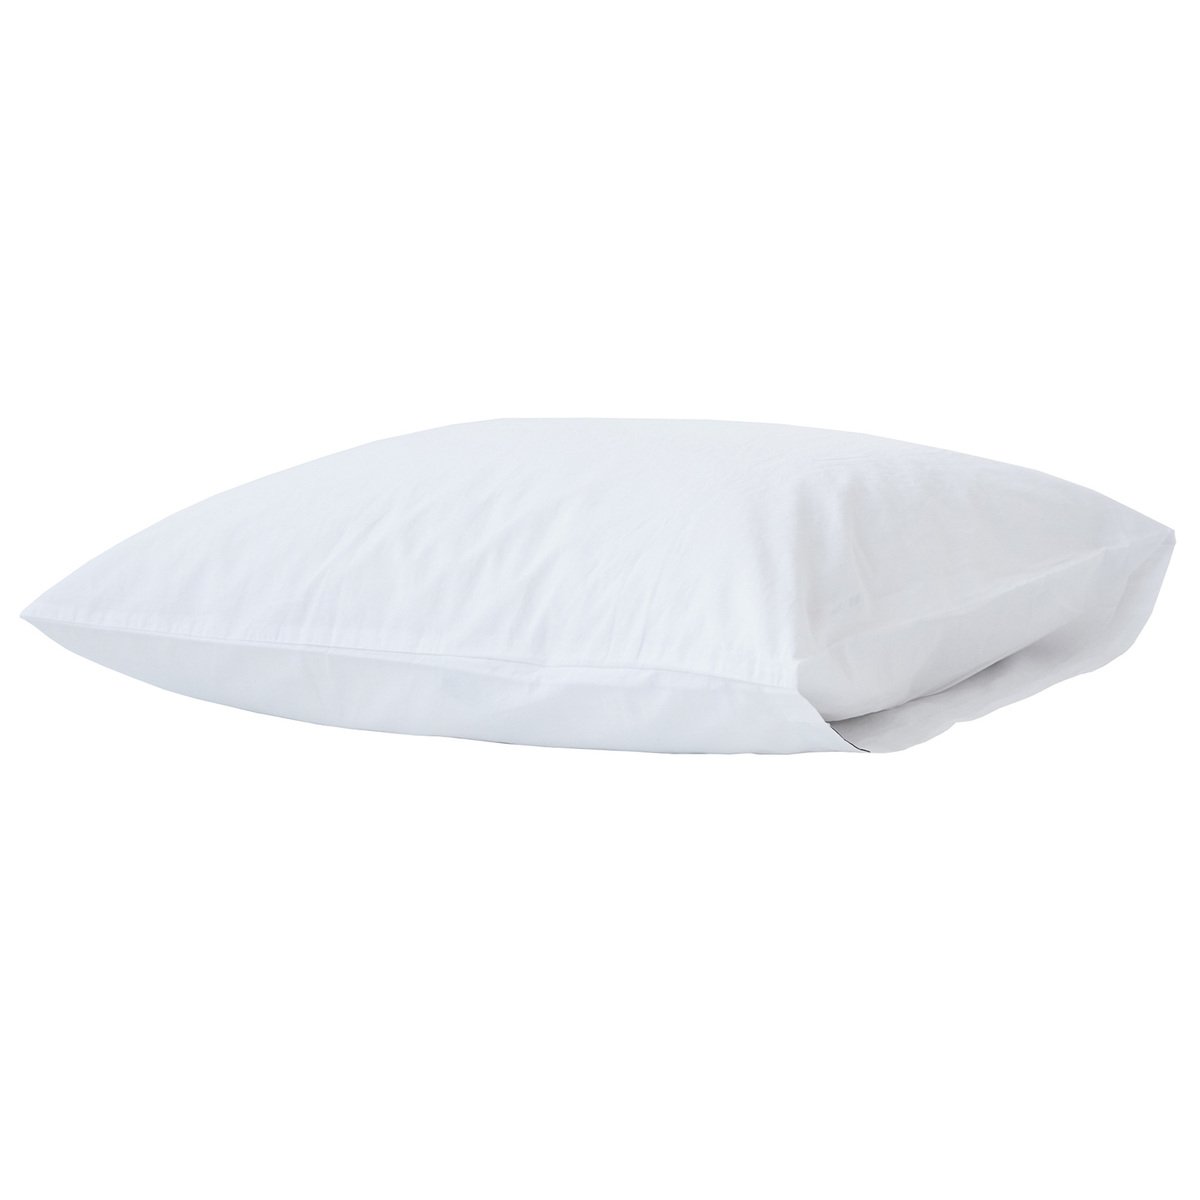 Tekla Pillow sham, 50 x 60 cm, broken white | Finnish Design Shop